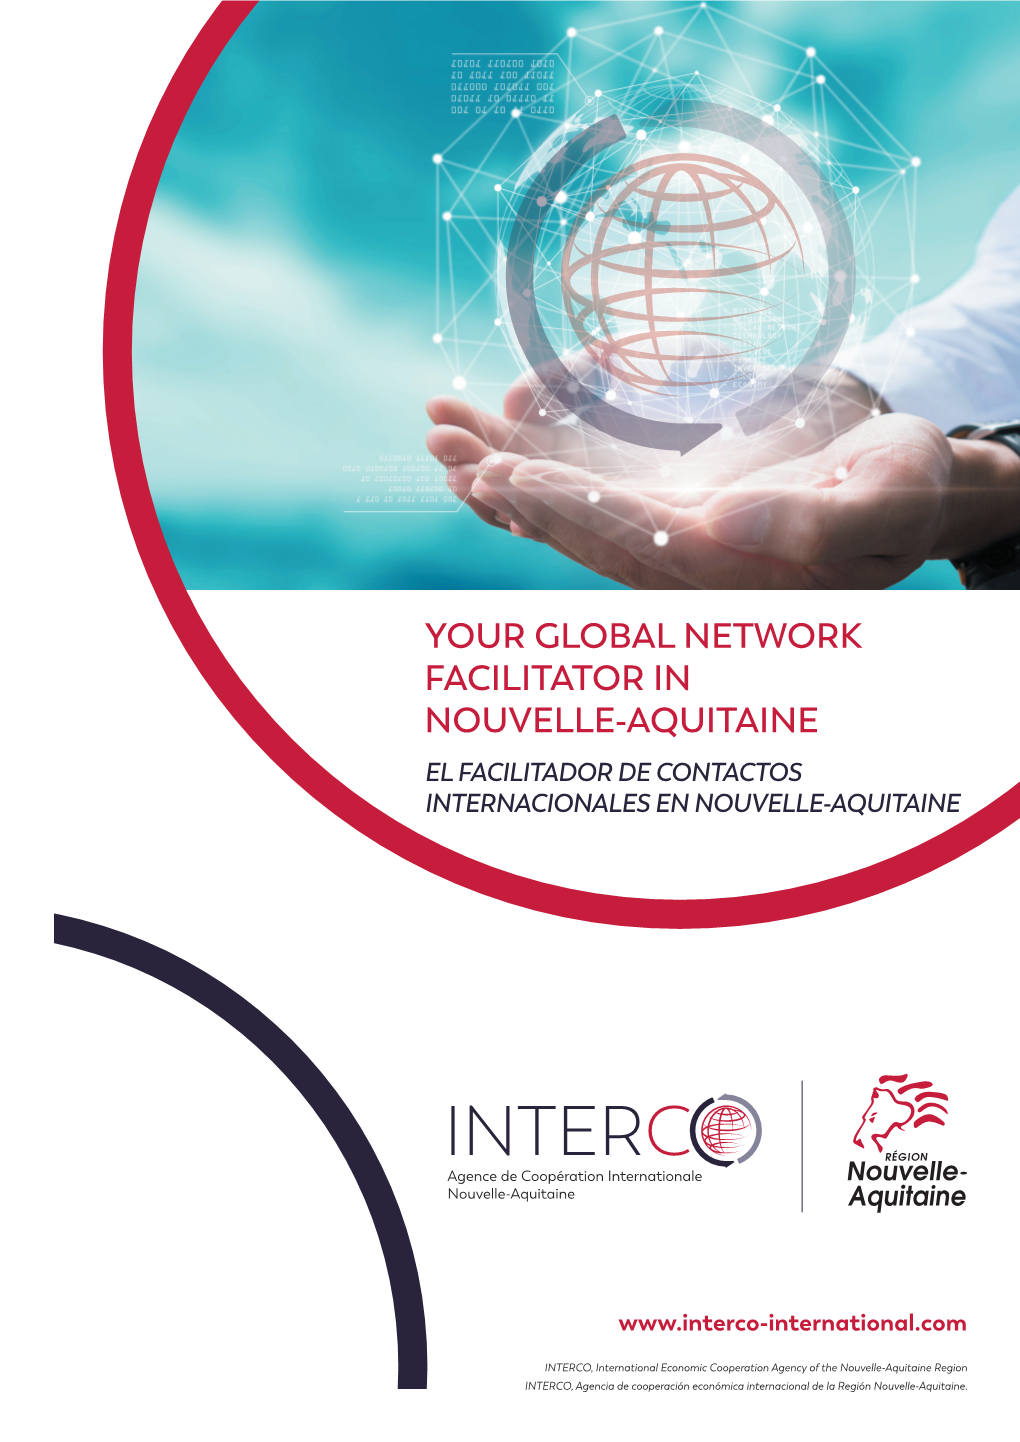 Your Global Network Facilitator in Nouvelle-Aquitaine El Facilitador De Contactos Internacionales En Nouvelle-Aquitaine